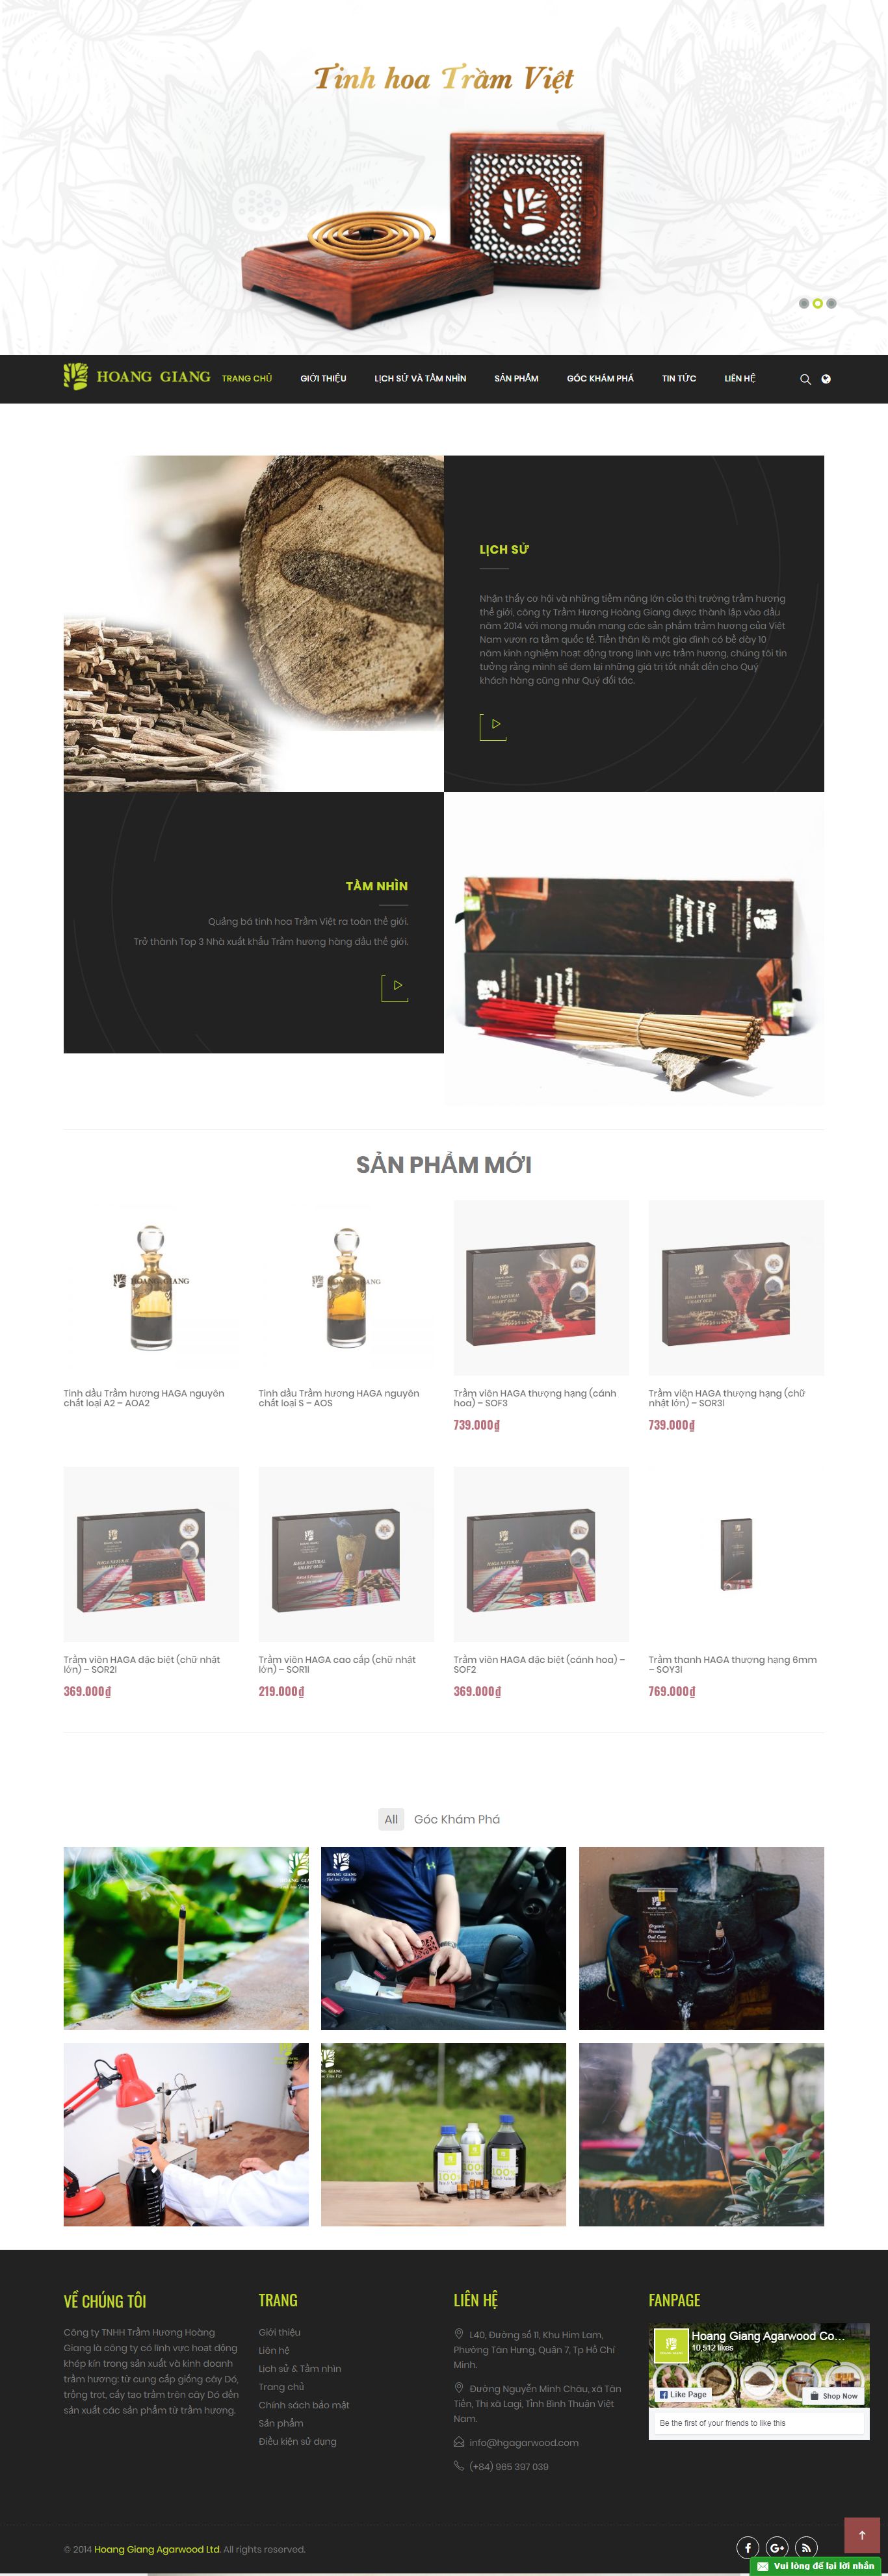 Thiết kế Website bán trầm hương - www.tramhuonghg.com